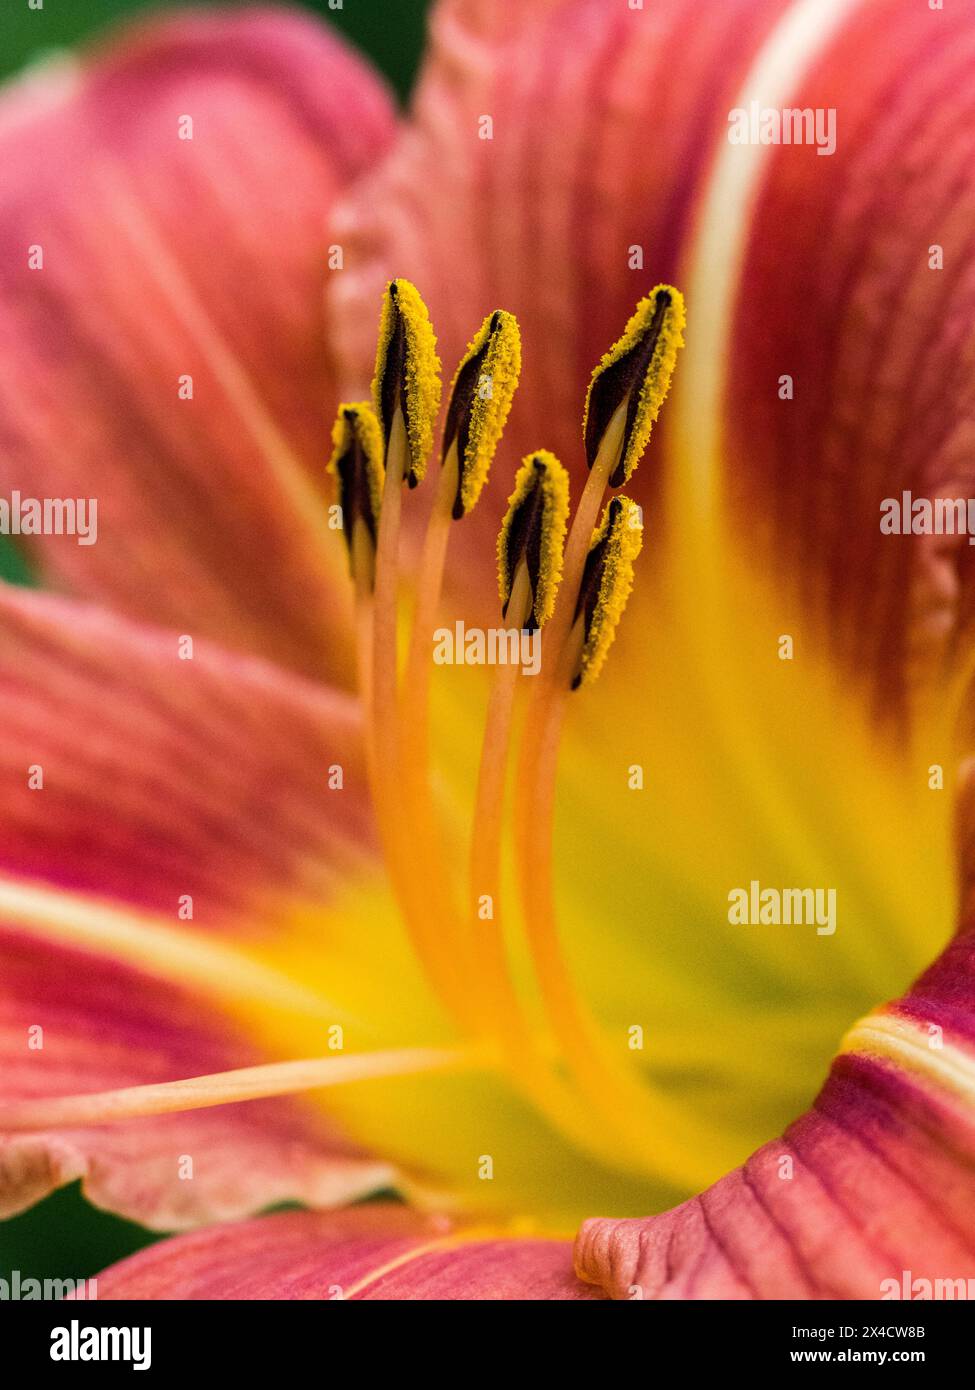 USA, Washington State, Auburn. Selektiver Fokus einer hellorange-gelben Taglilienblüte. Stockfoto